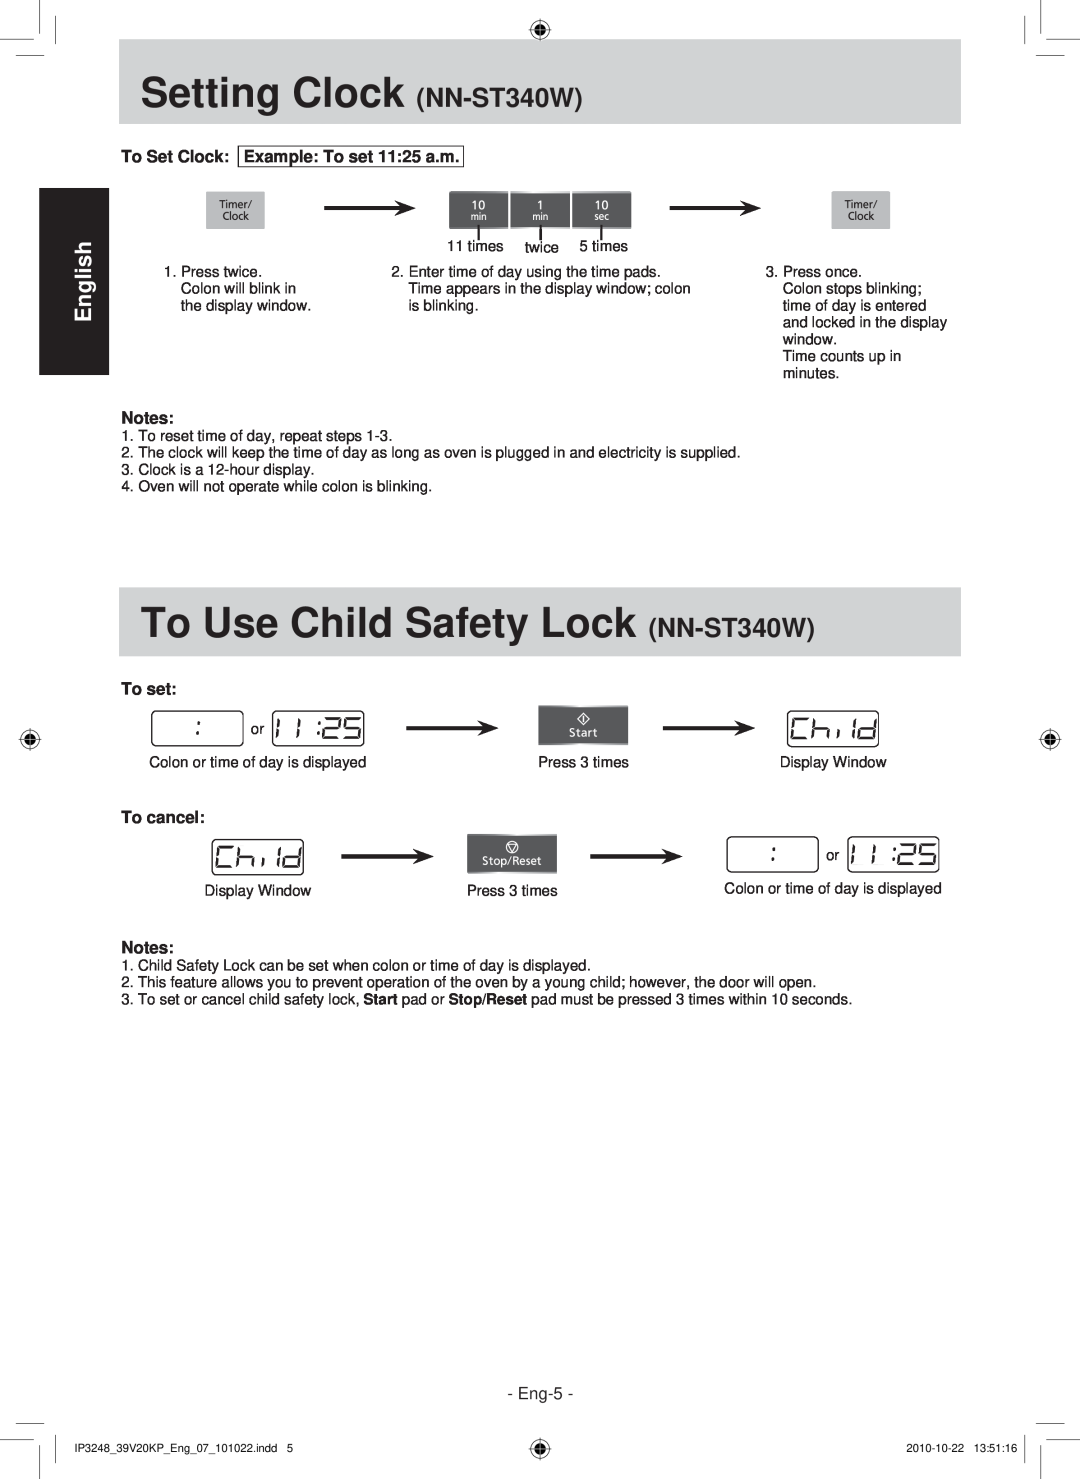 Panasonic Setting Clock NN-ST340W, To Use Child Safety Lock NN-ST340W, English, To Set Clock Example To set 1125 a.m 